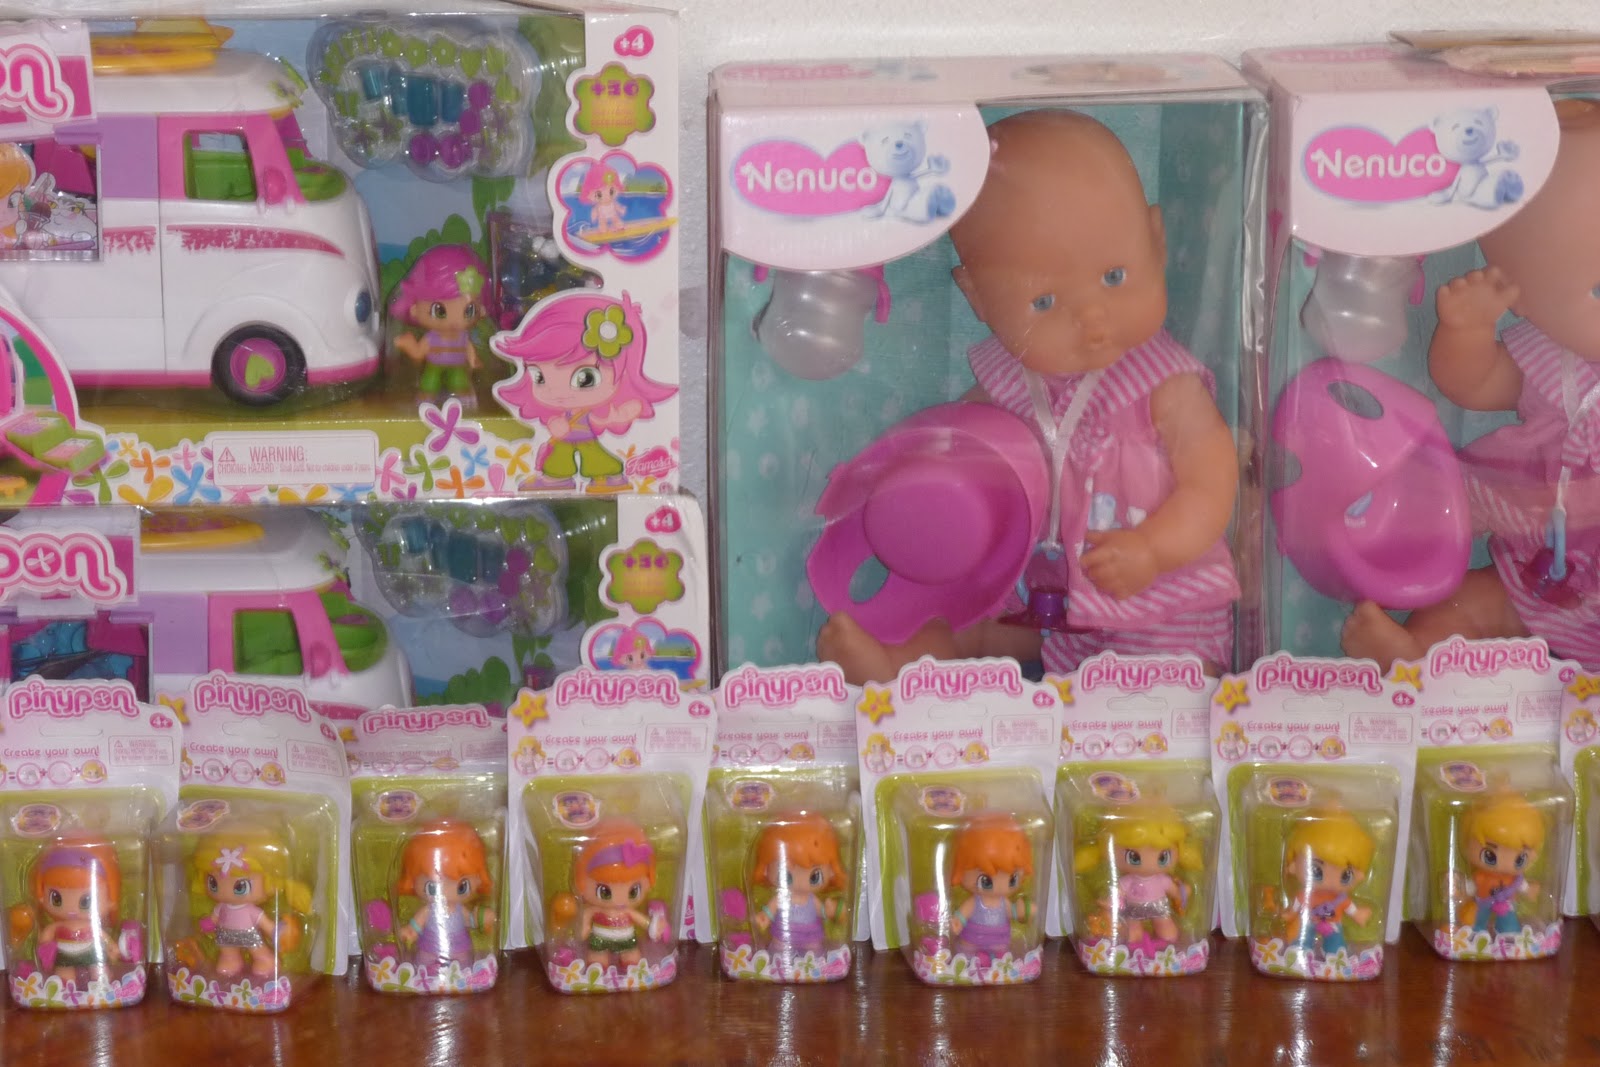 Pinypon Collectors Set 4 Dolls, 2 Pets And Accessories 